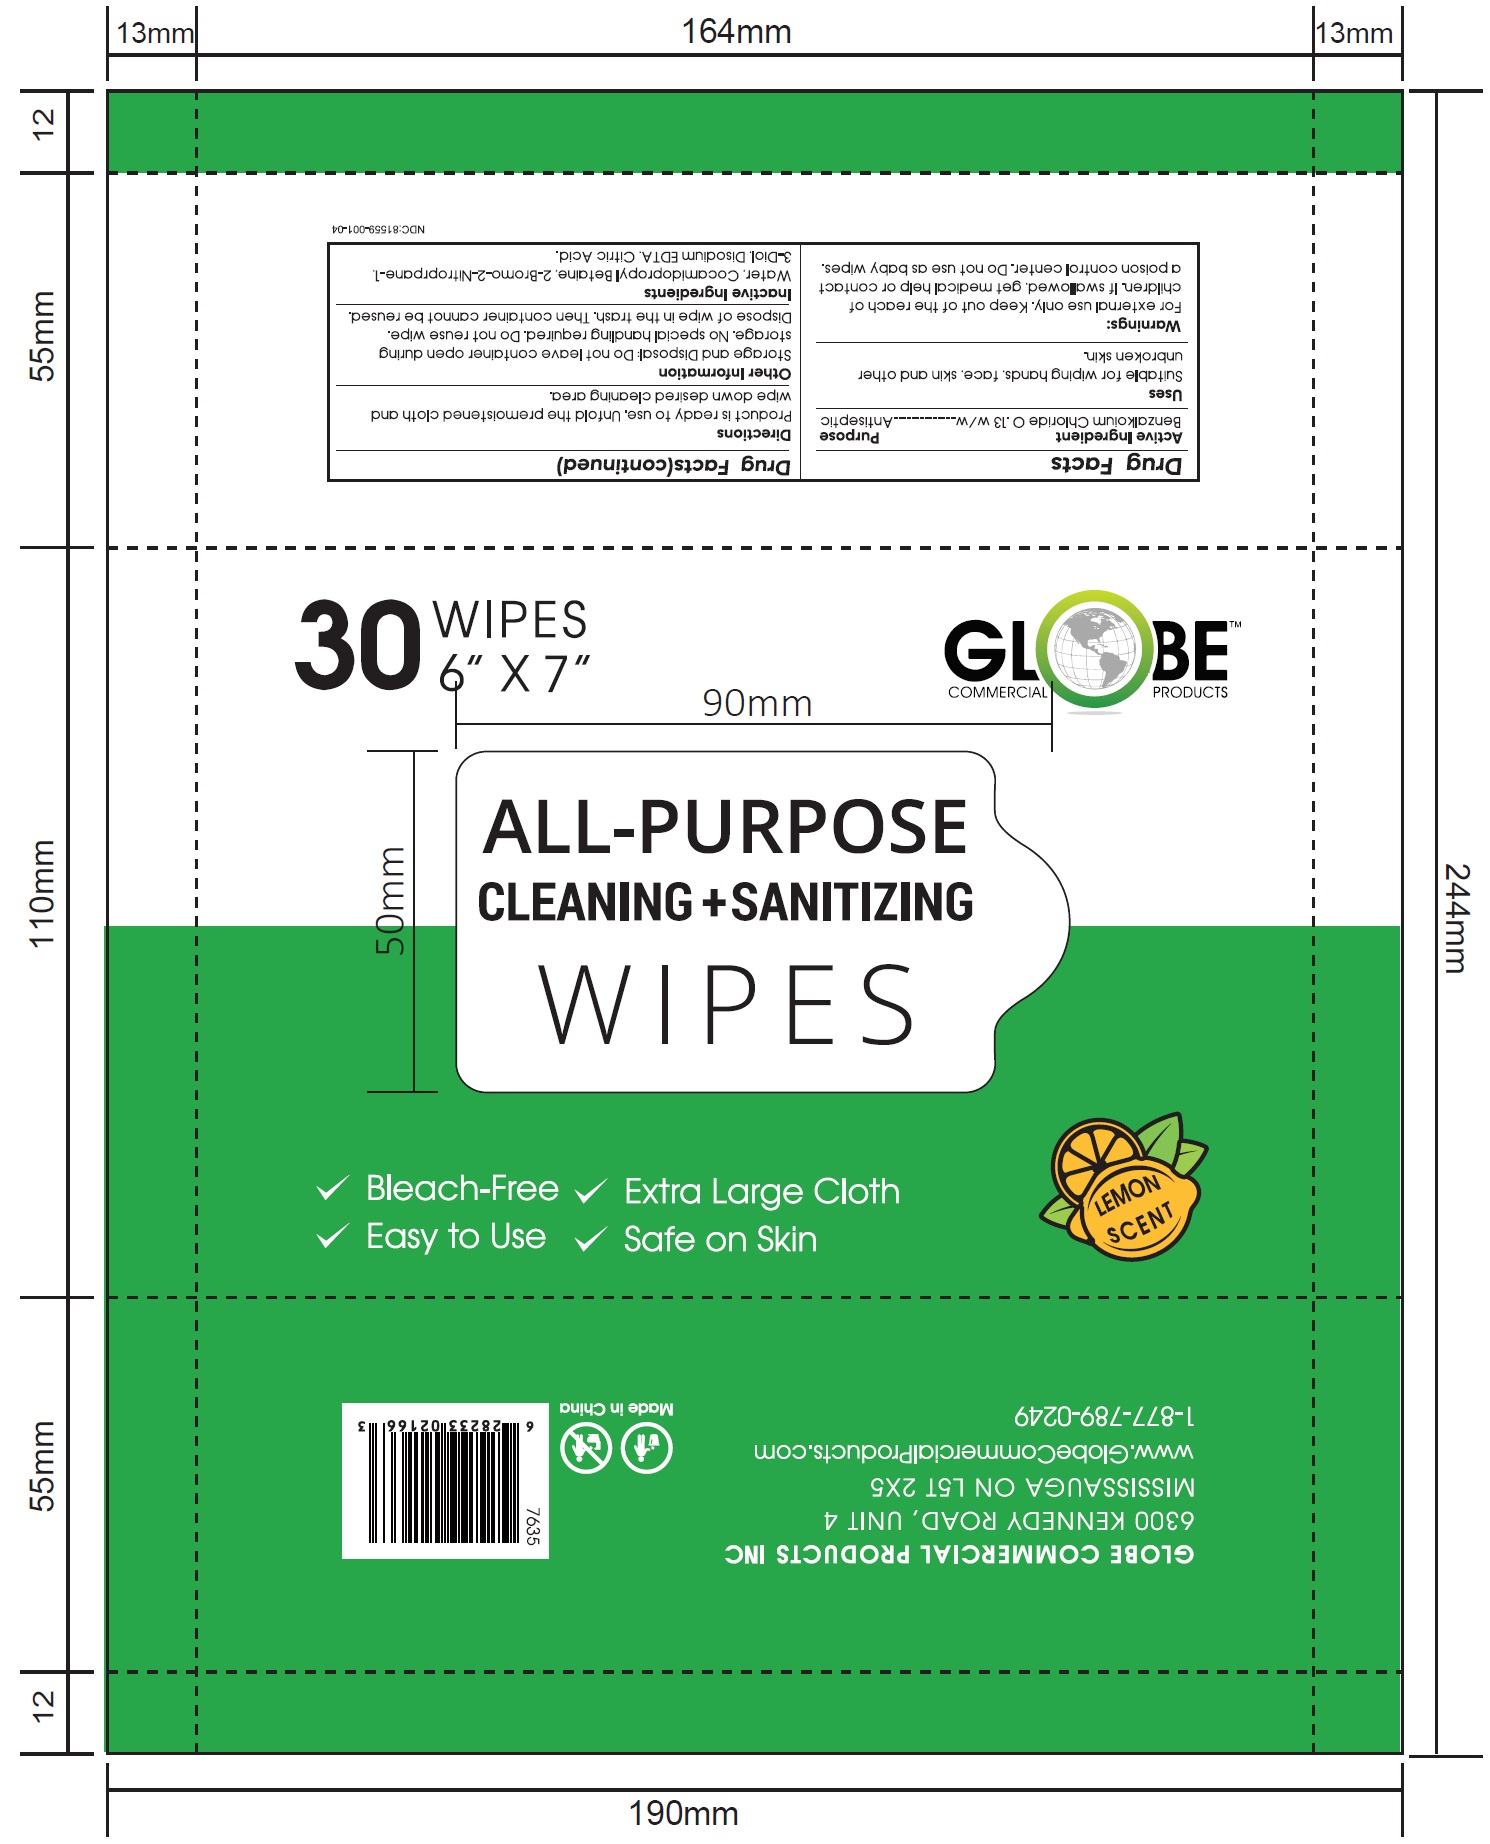 30 Wipes Label